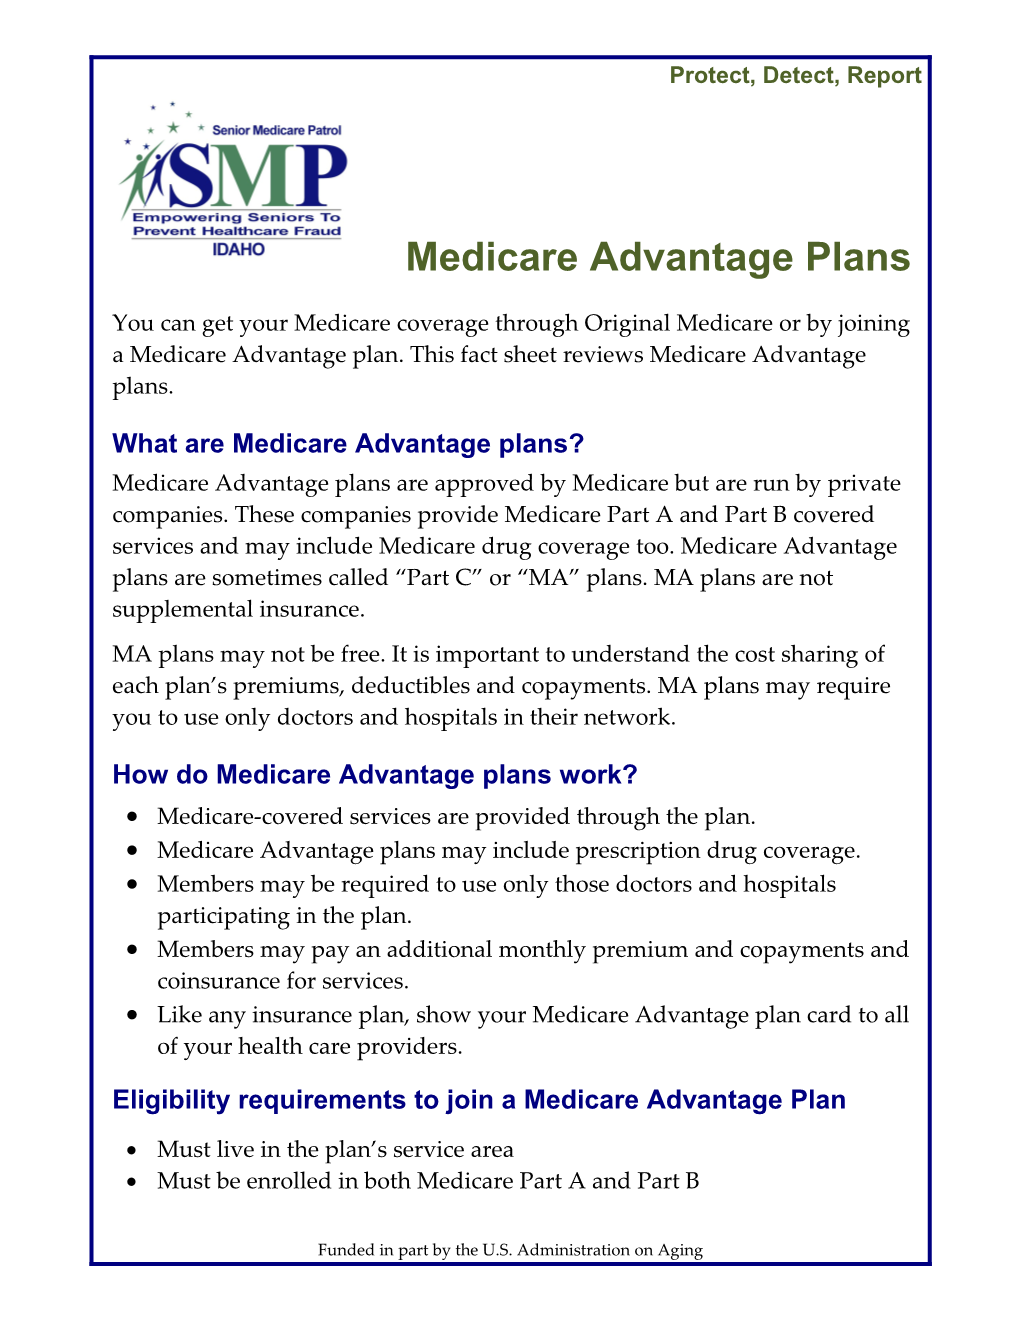 Medicare Advantage Plan Fact Sheet